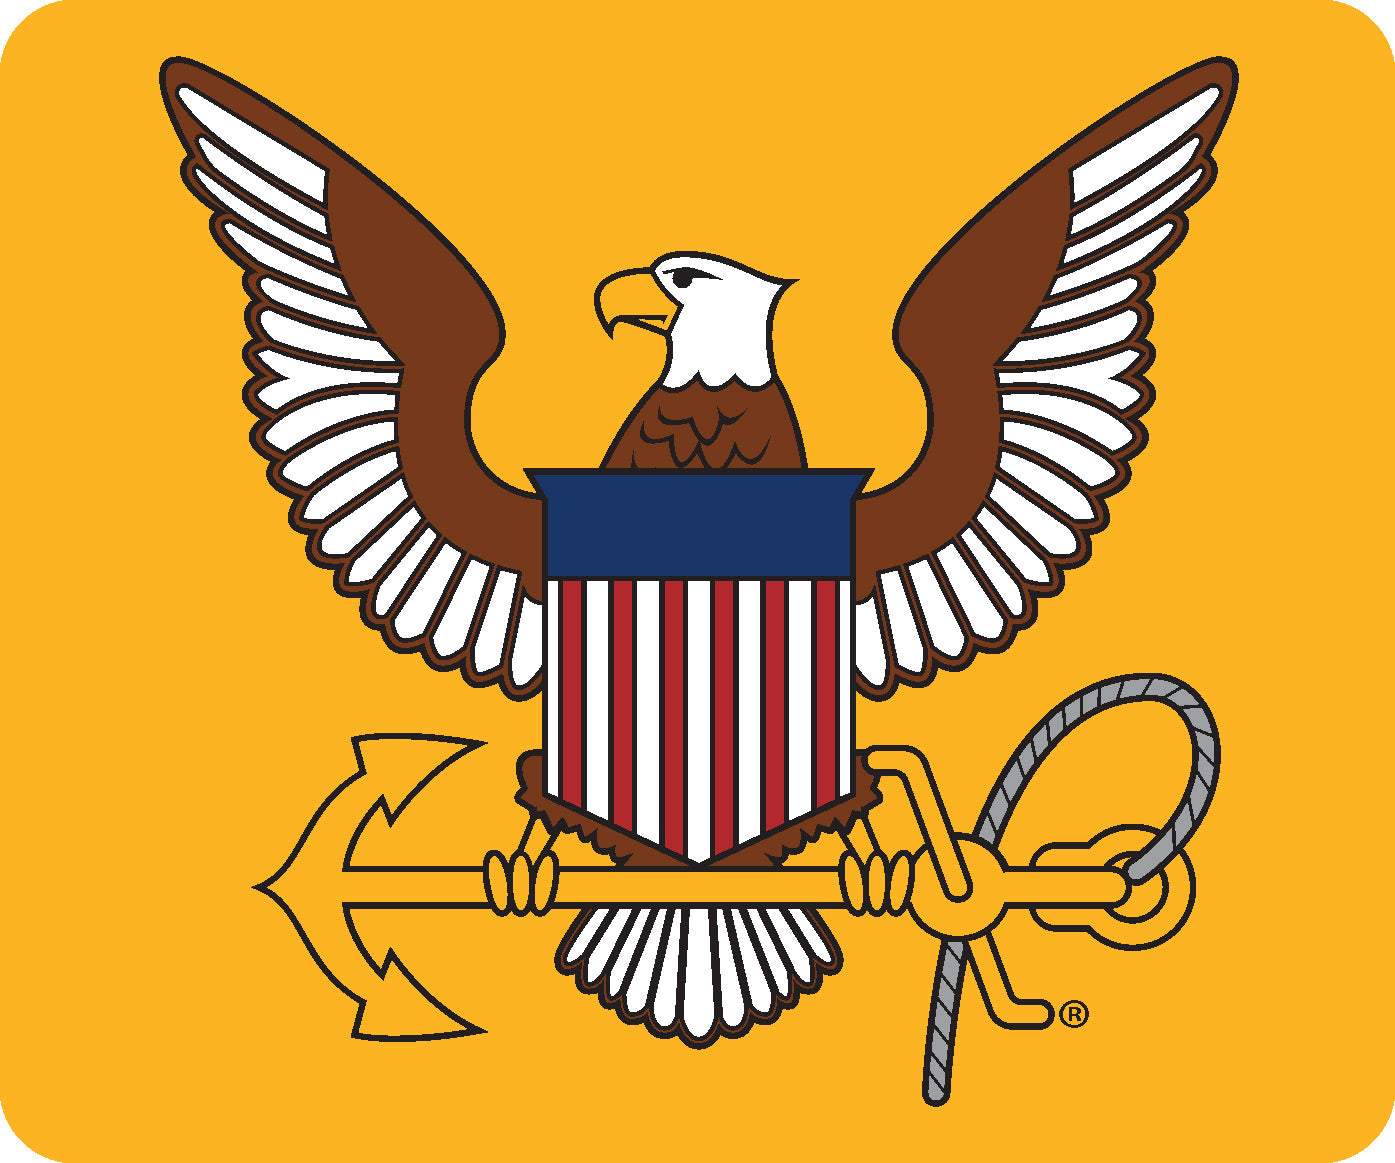 U.S. Navy Symbol on Mouse Pad